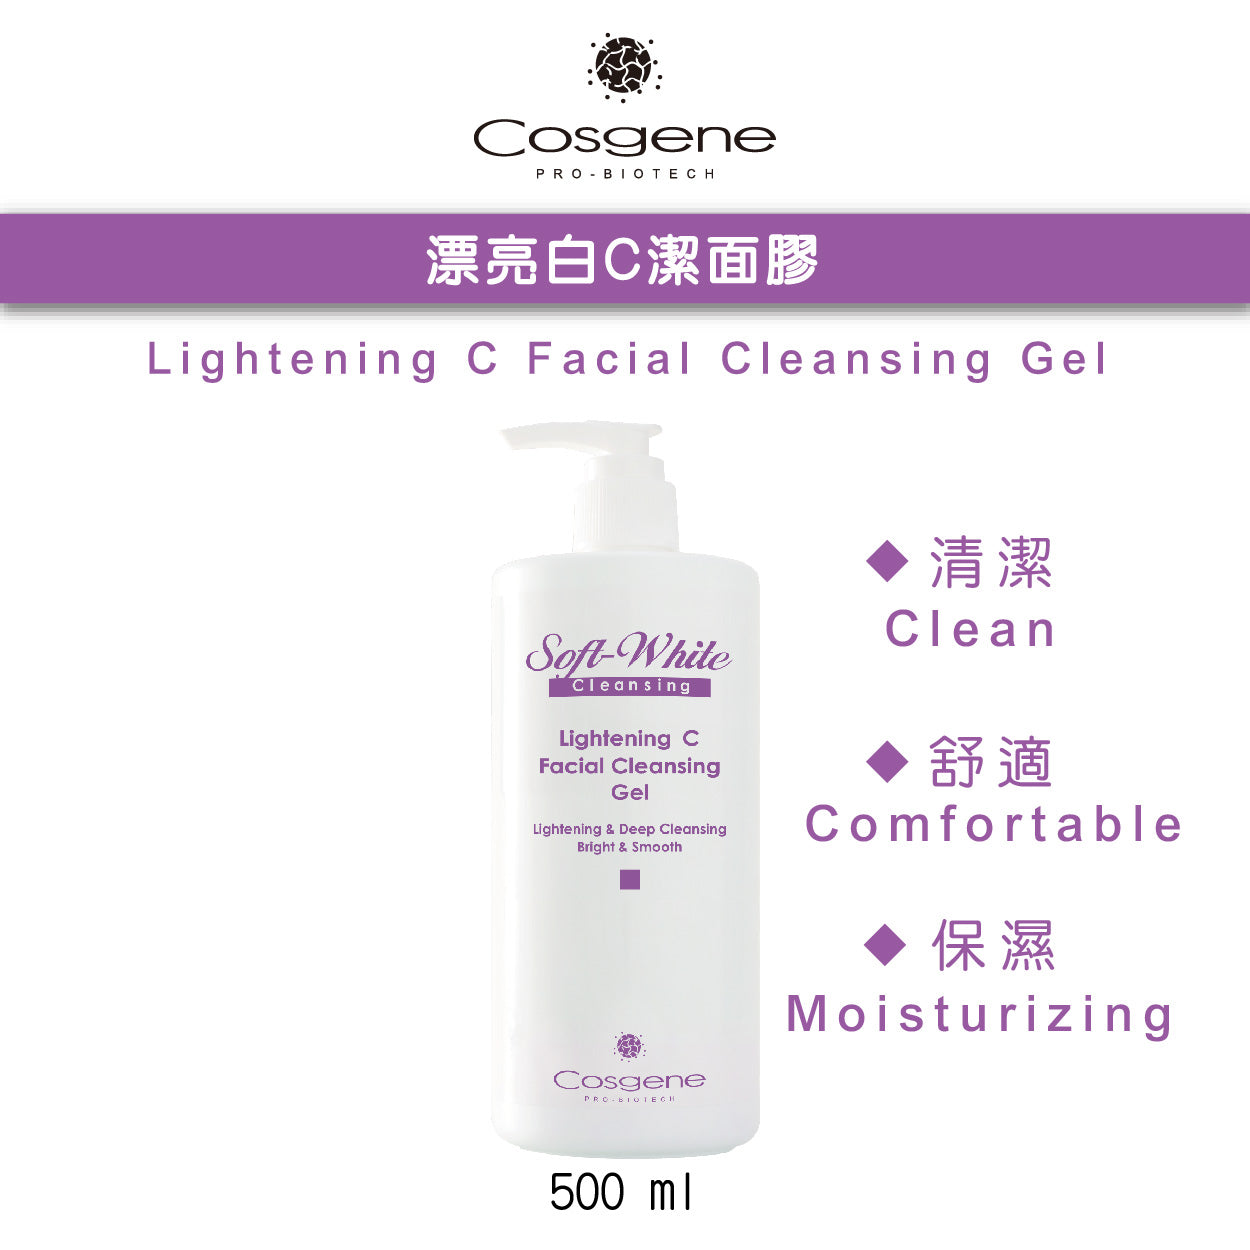 【COSGENE】Lightening C Facial Cleansing Gel